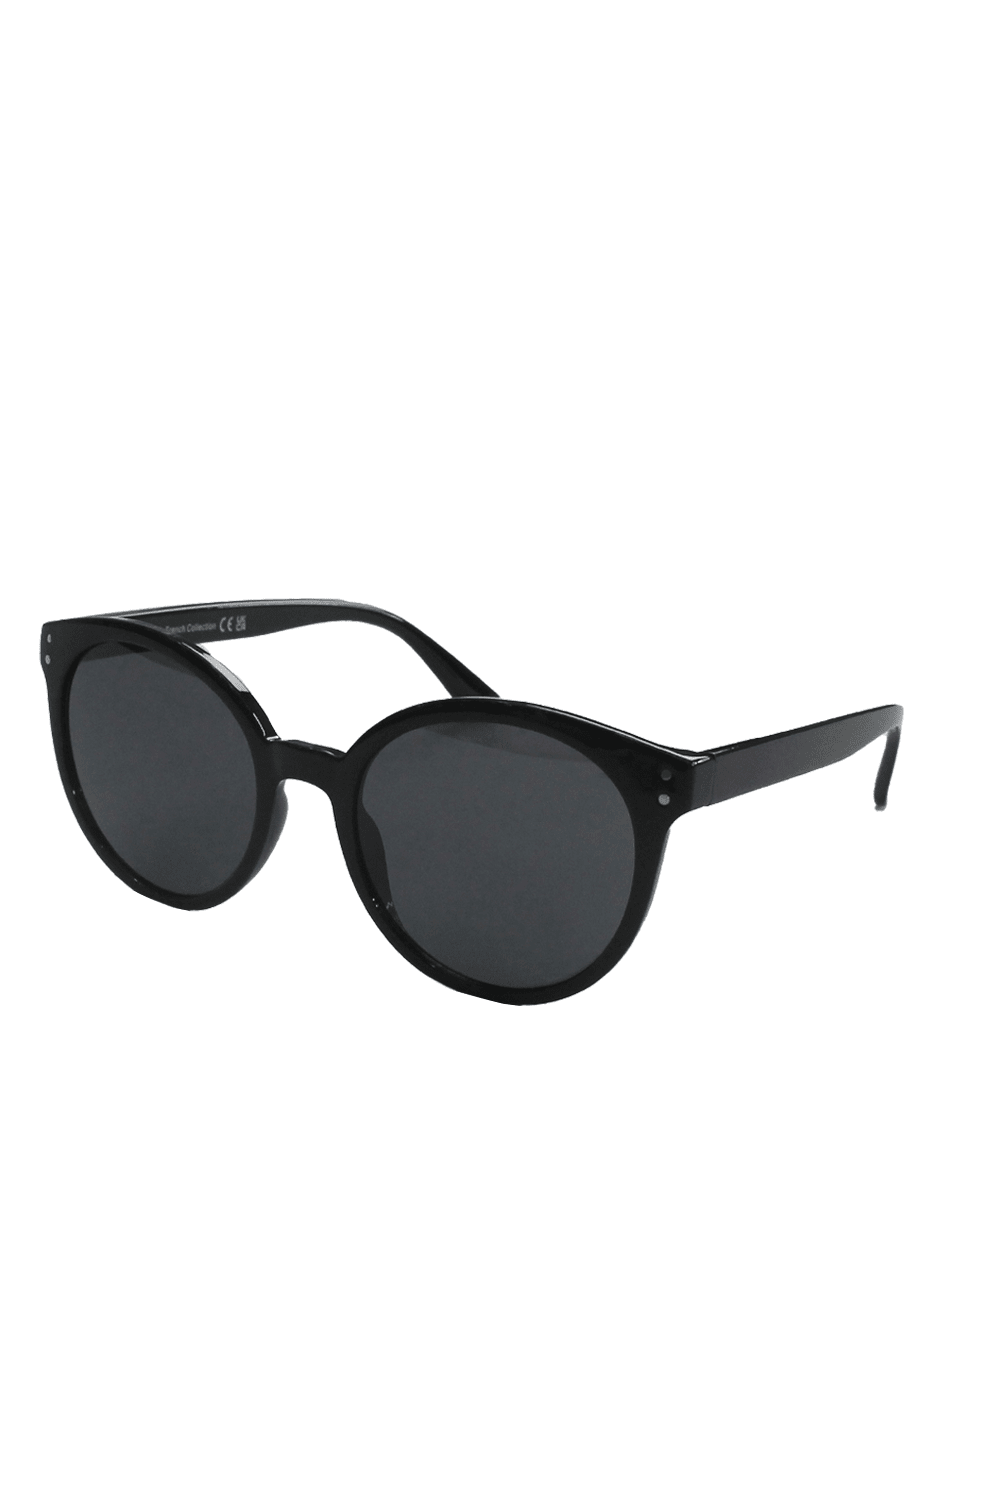 Adara Sunglasses Black sunglasses